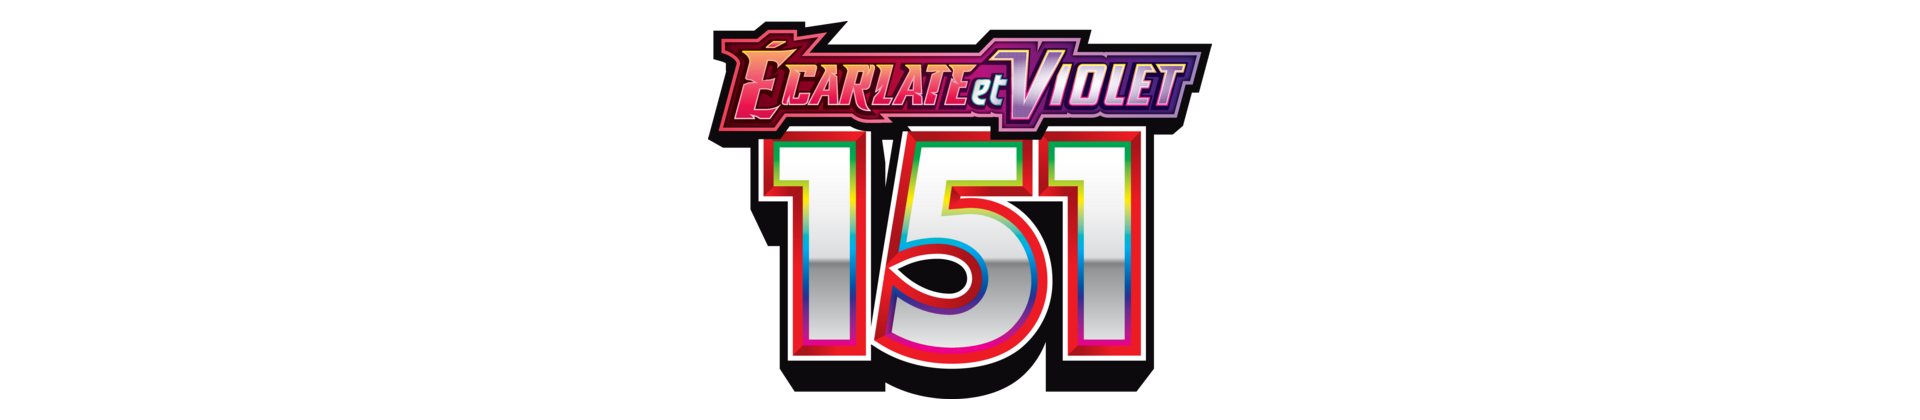 EV03.5 EV151 Ecarlate et Violet 151